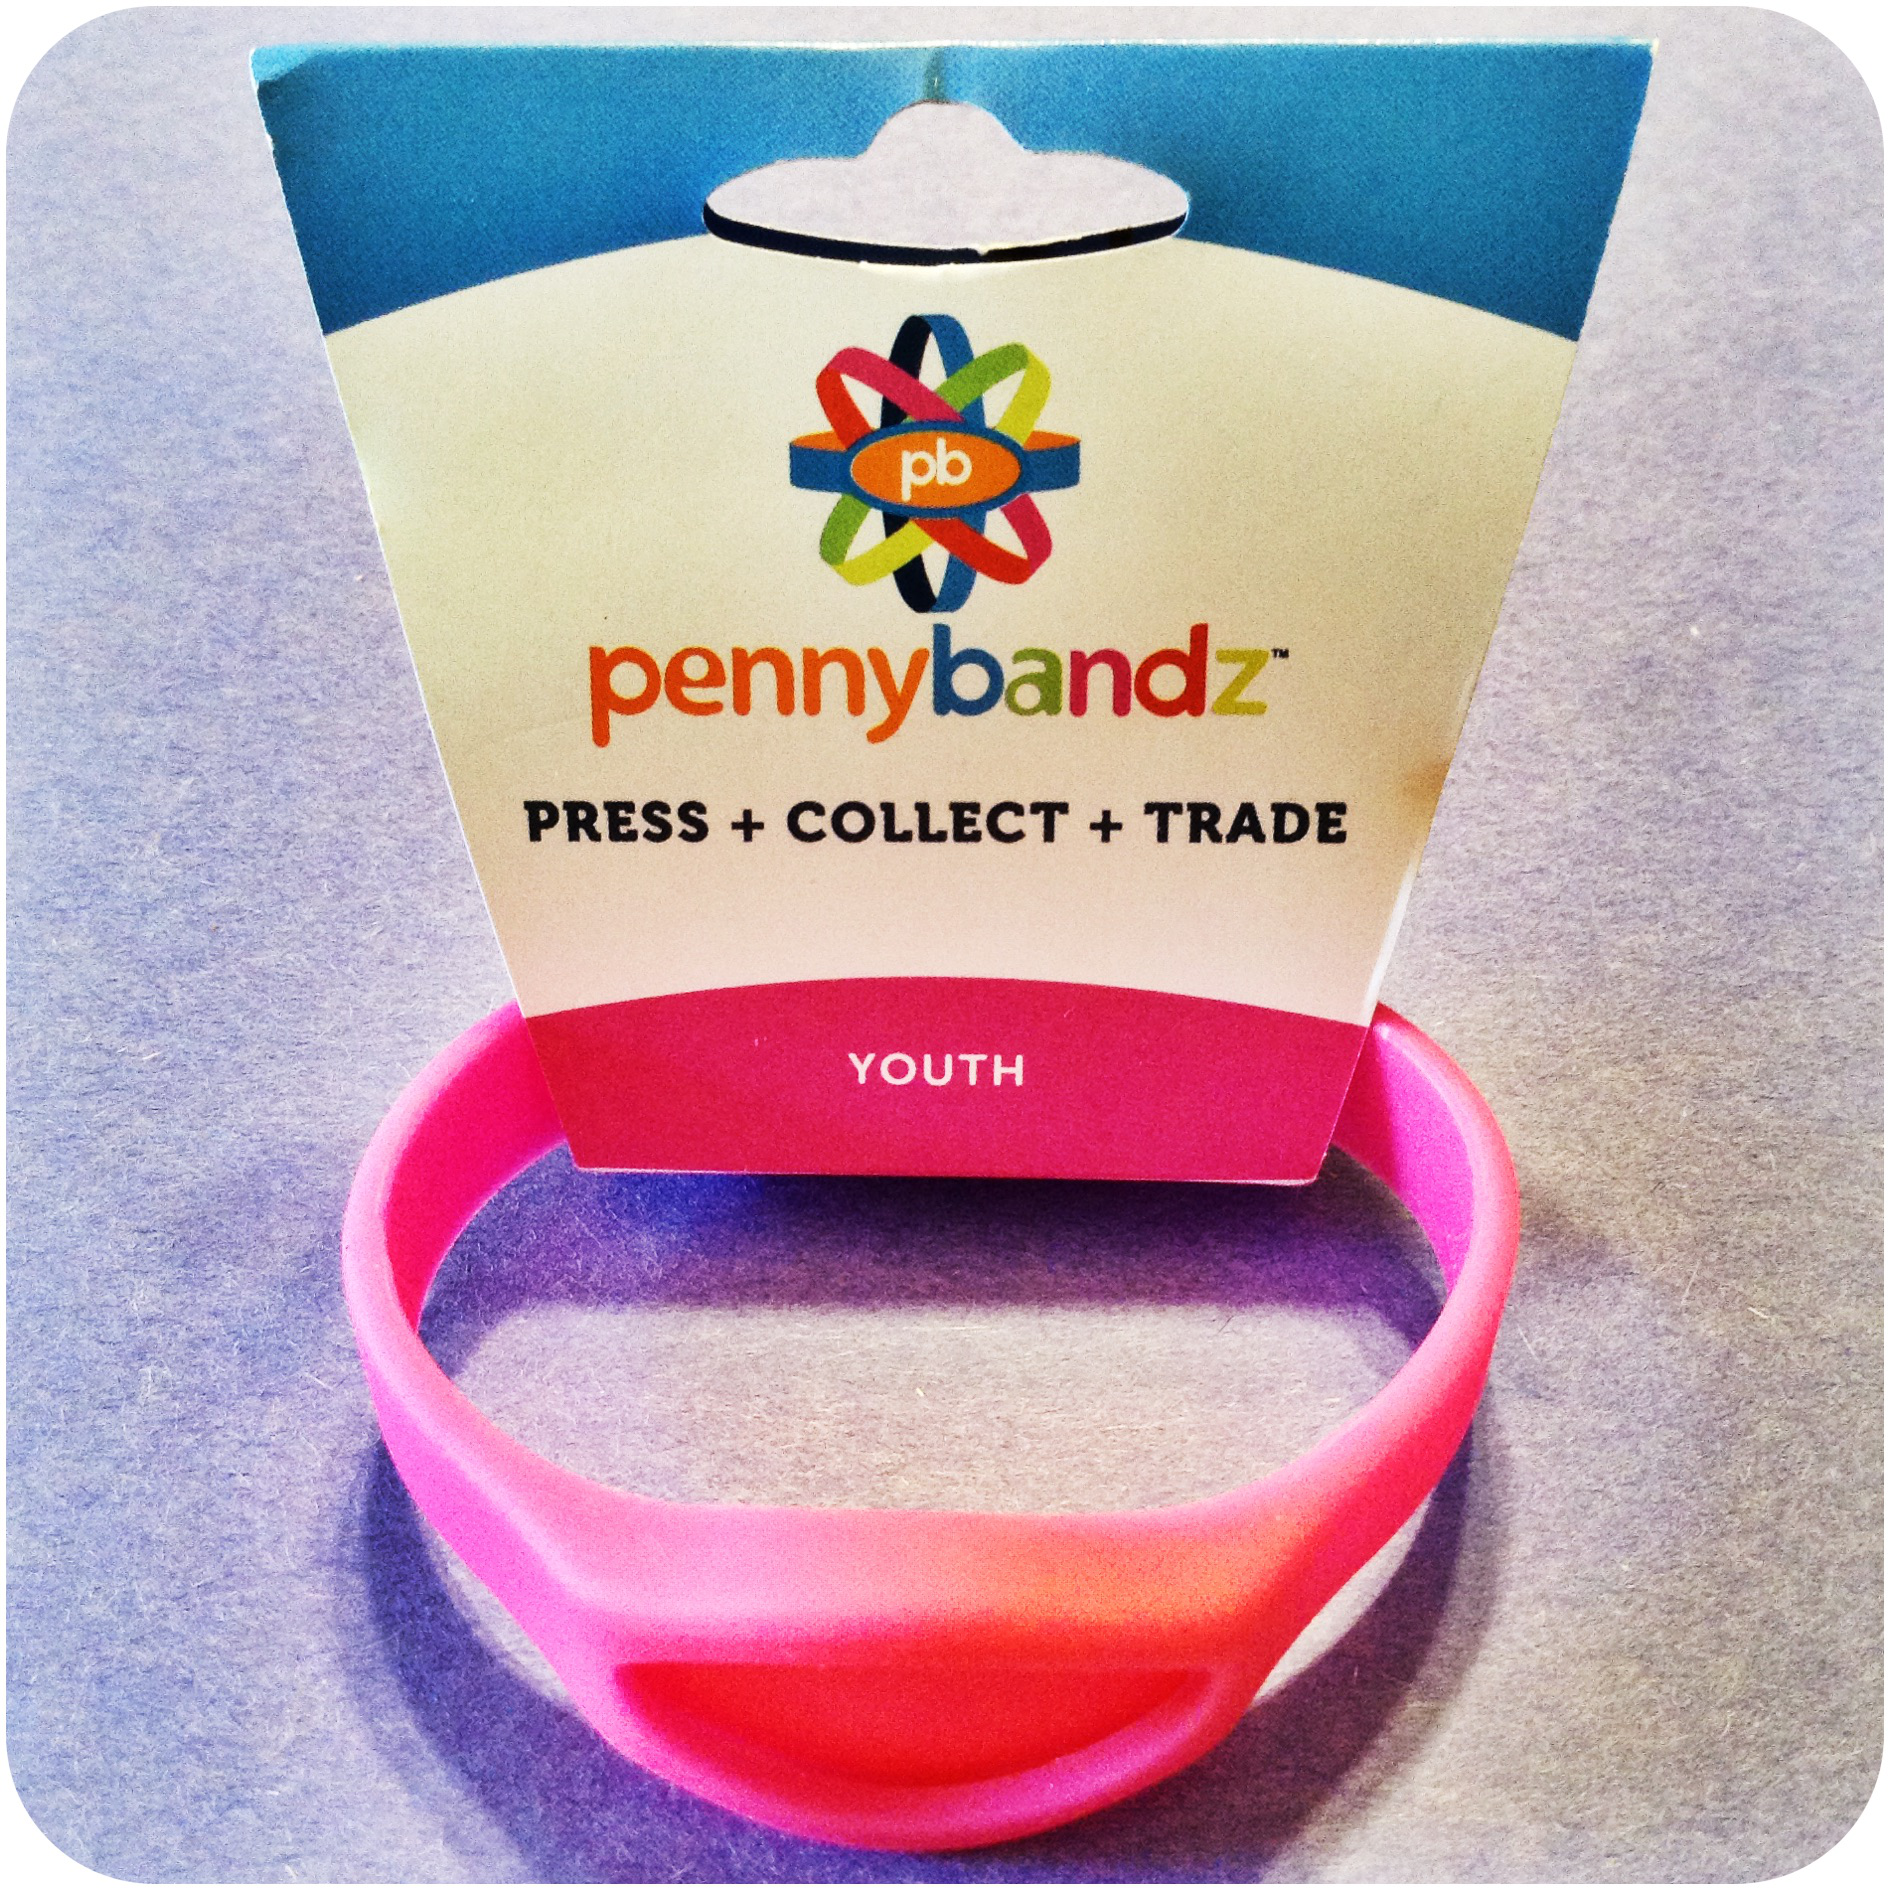 Pink Flamingo Pennybandz® Elongated Pressed Penny Holder Wristband in Youth Size